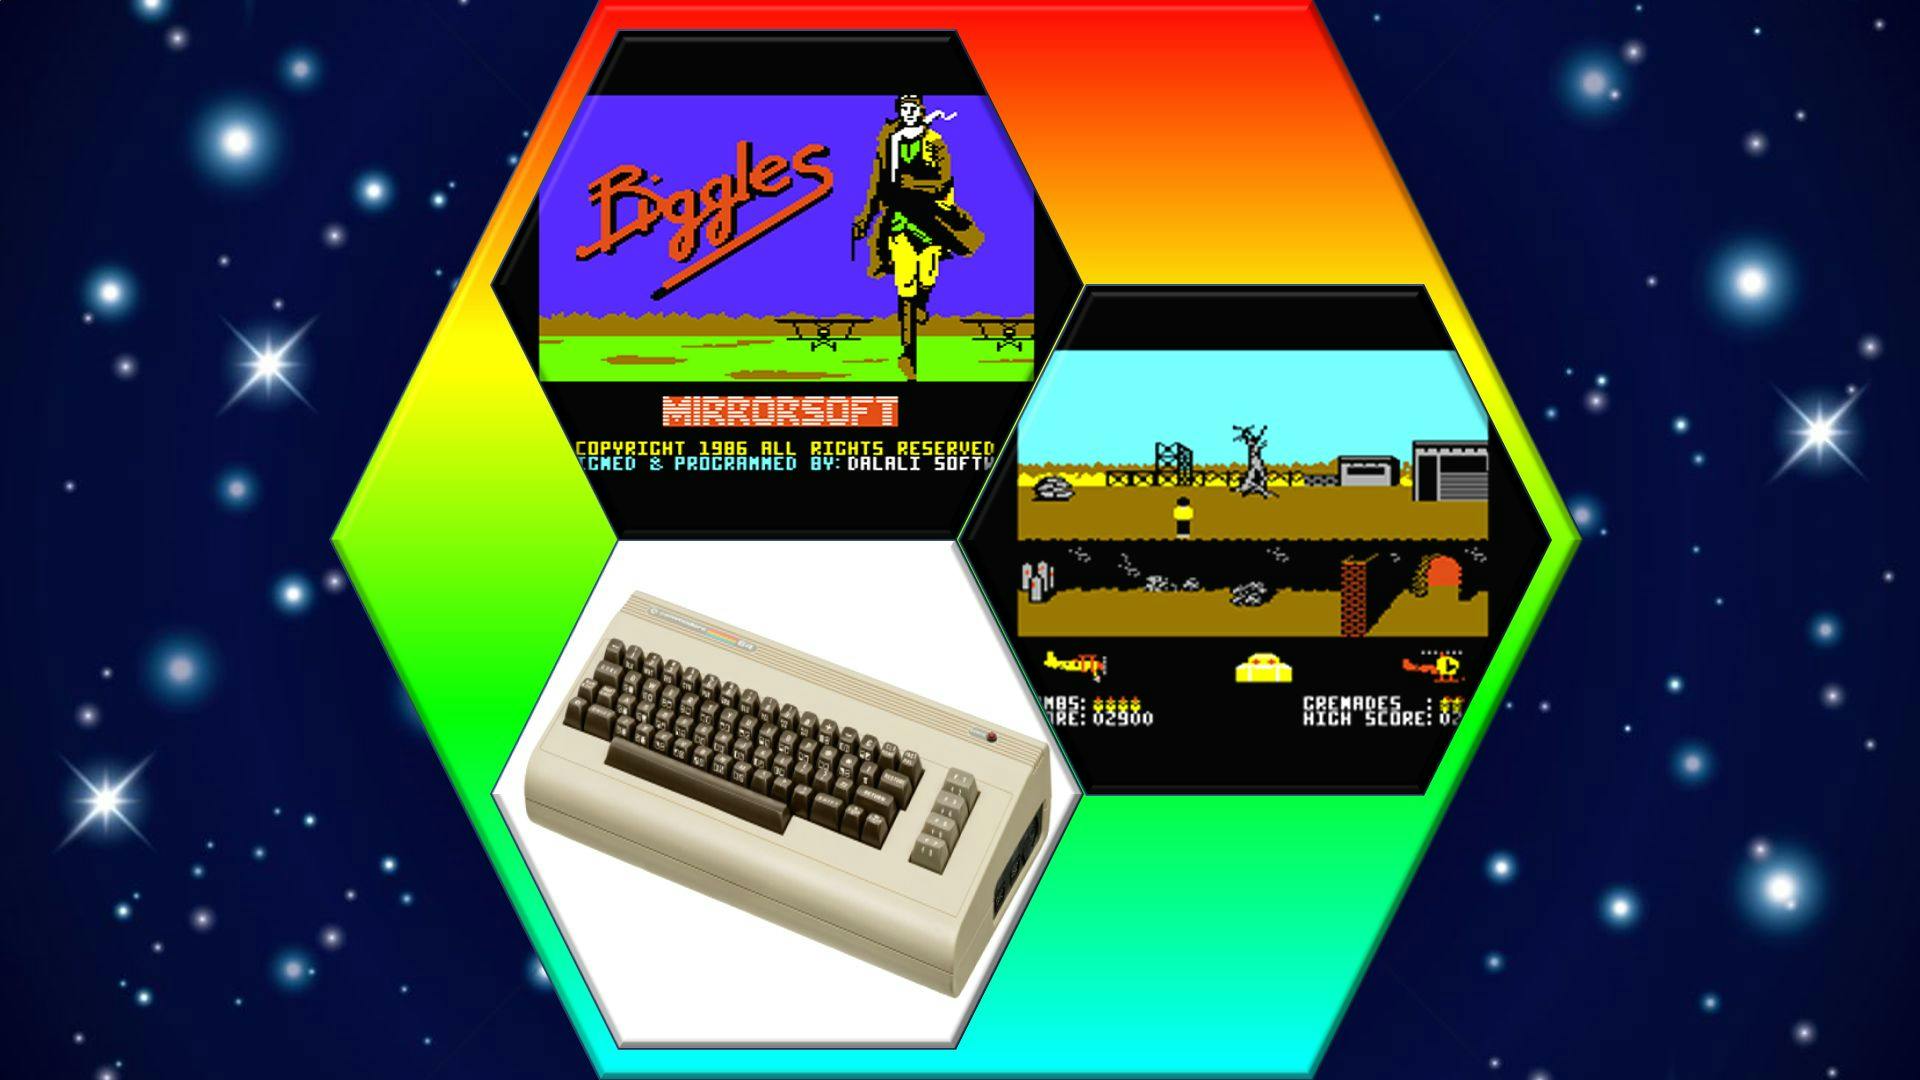 featured image - Biggles (Commodore 64) Retro Game Review